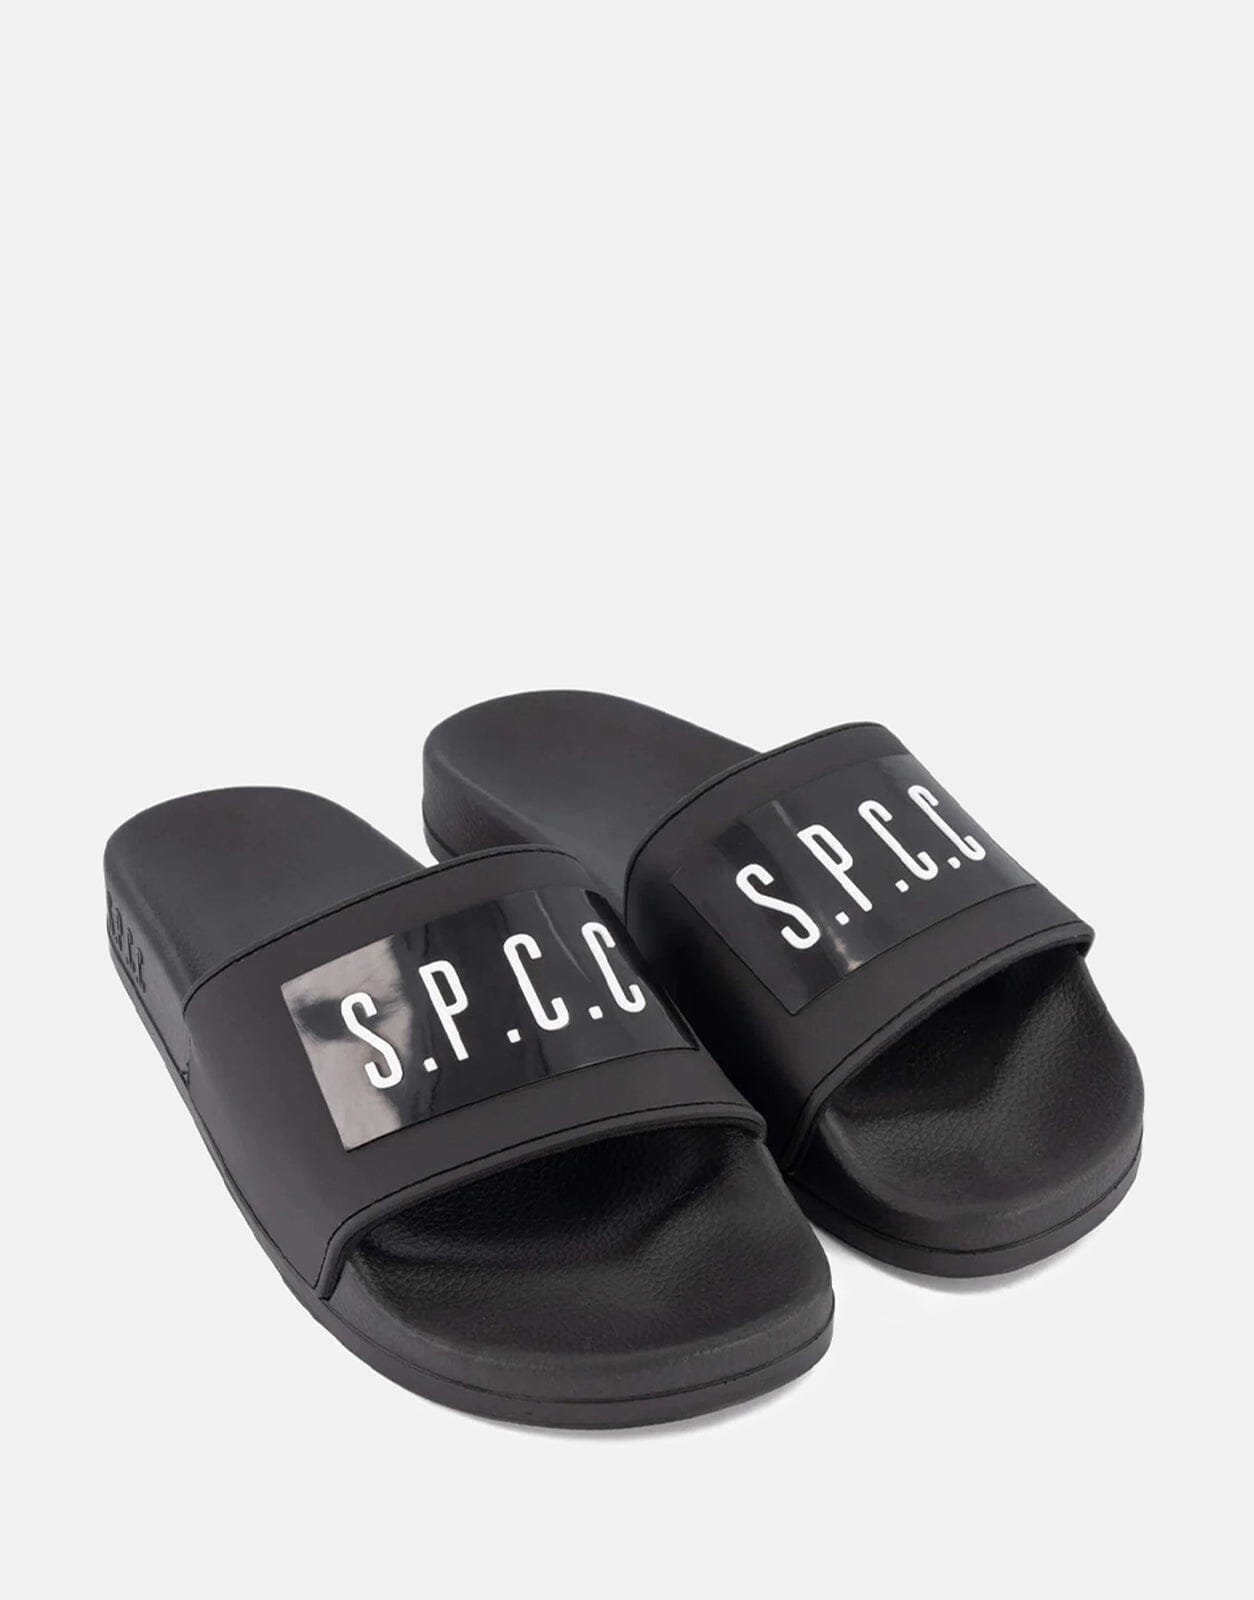 SPCC Matlock Black Slides - Subwear